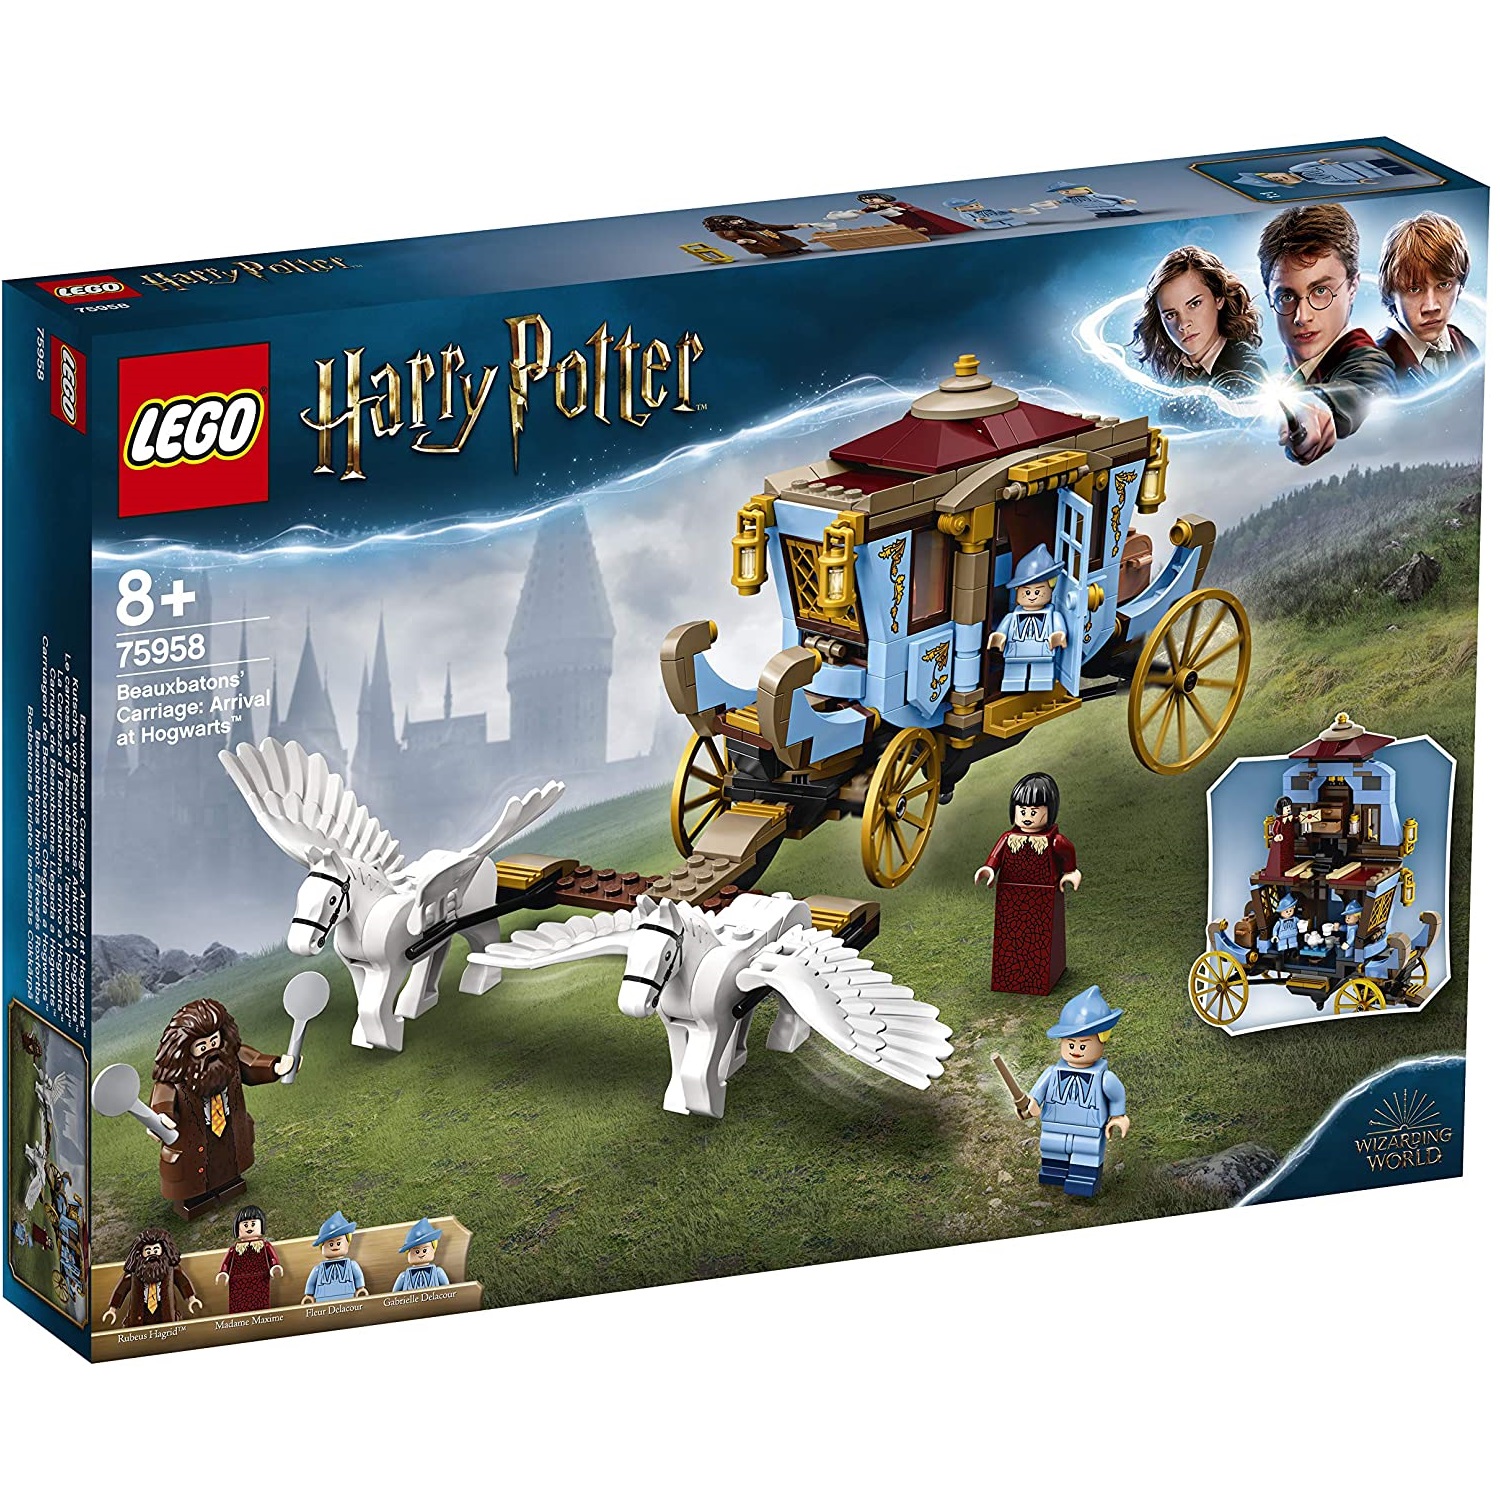 Trasura lui Beauxbatons Destinatia Hogwarts Lego Harry Potter, +8 ani, 75958, Lego